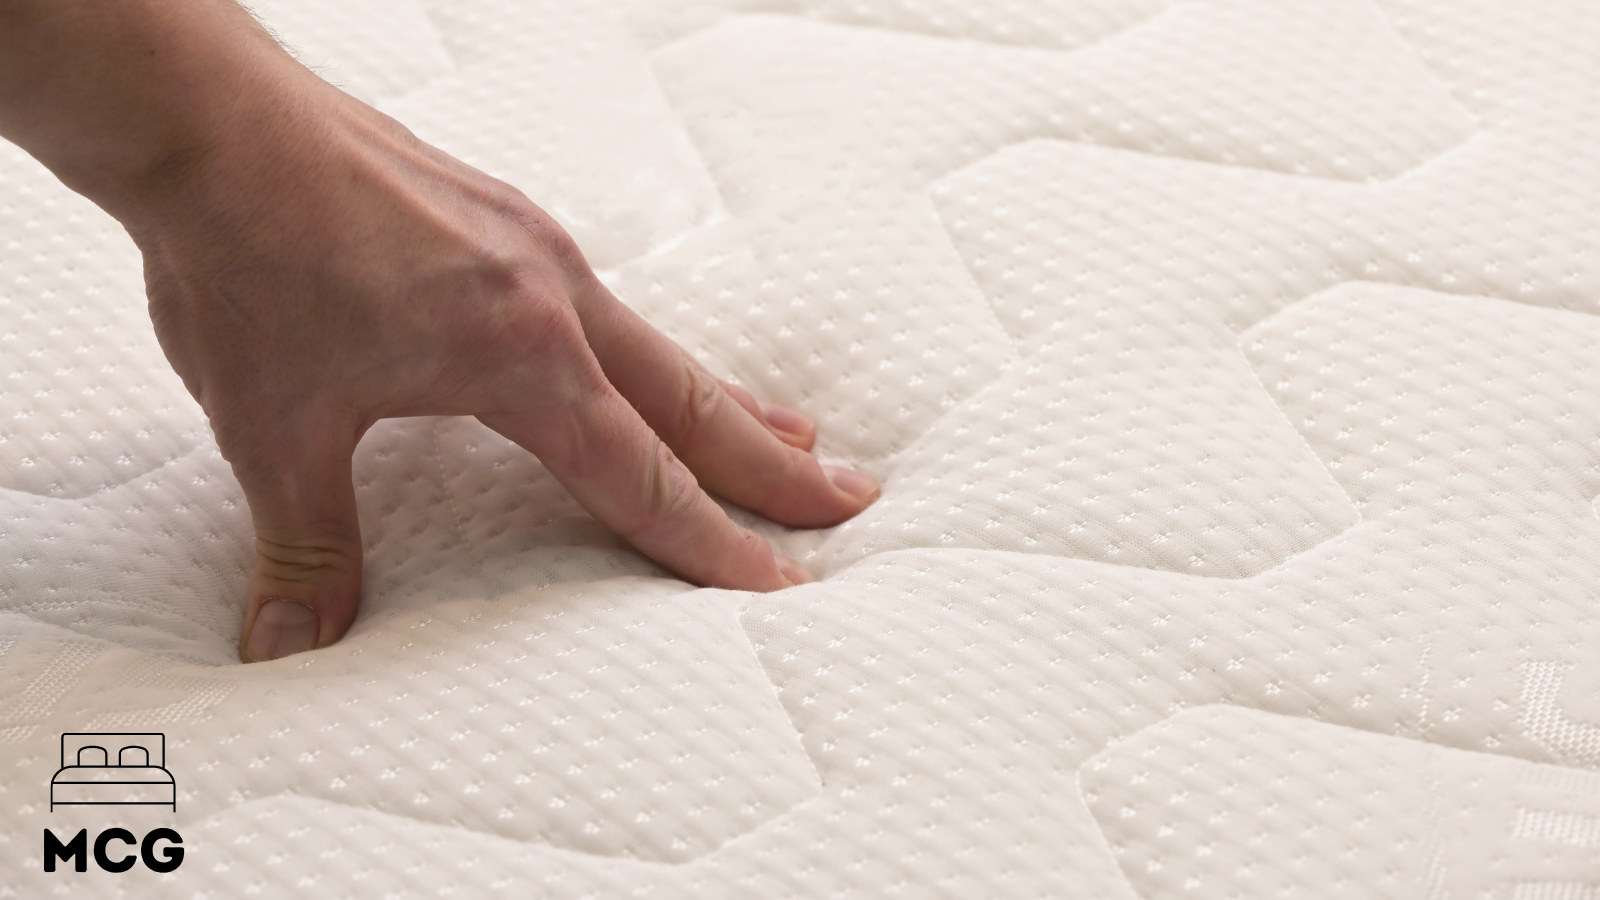 hand pressing into a memory foam mattress surface